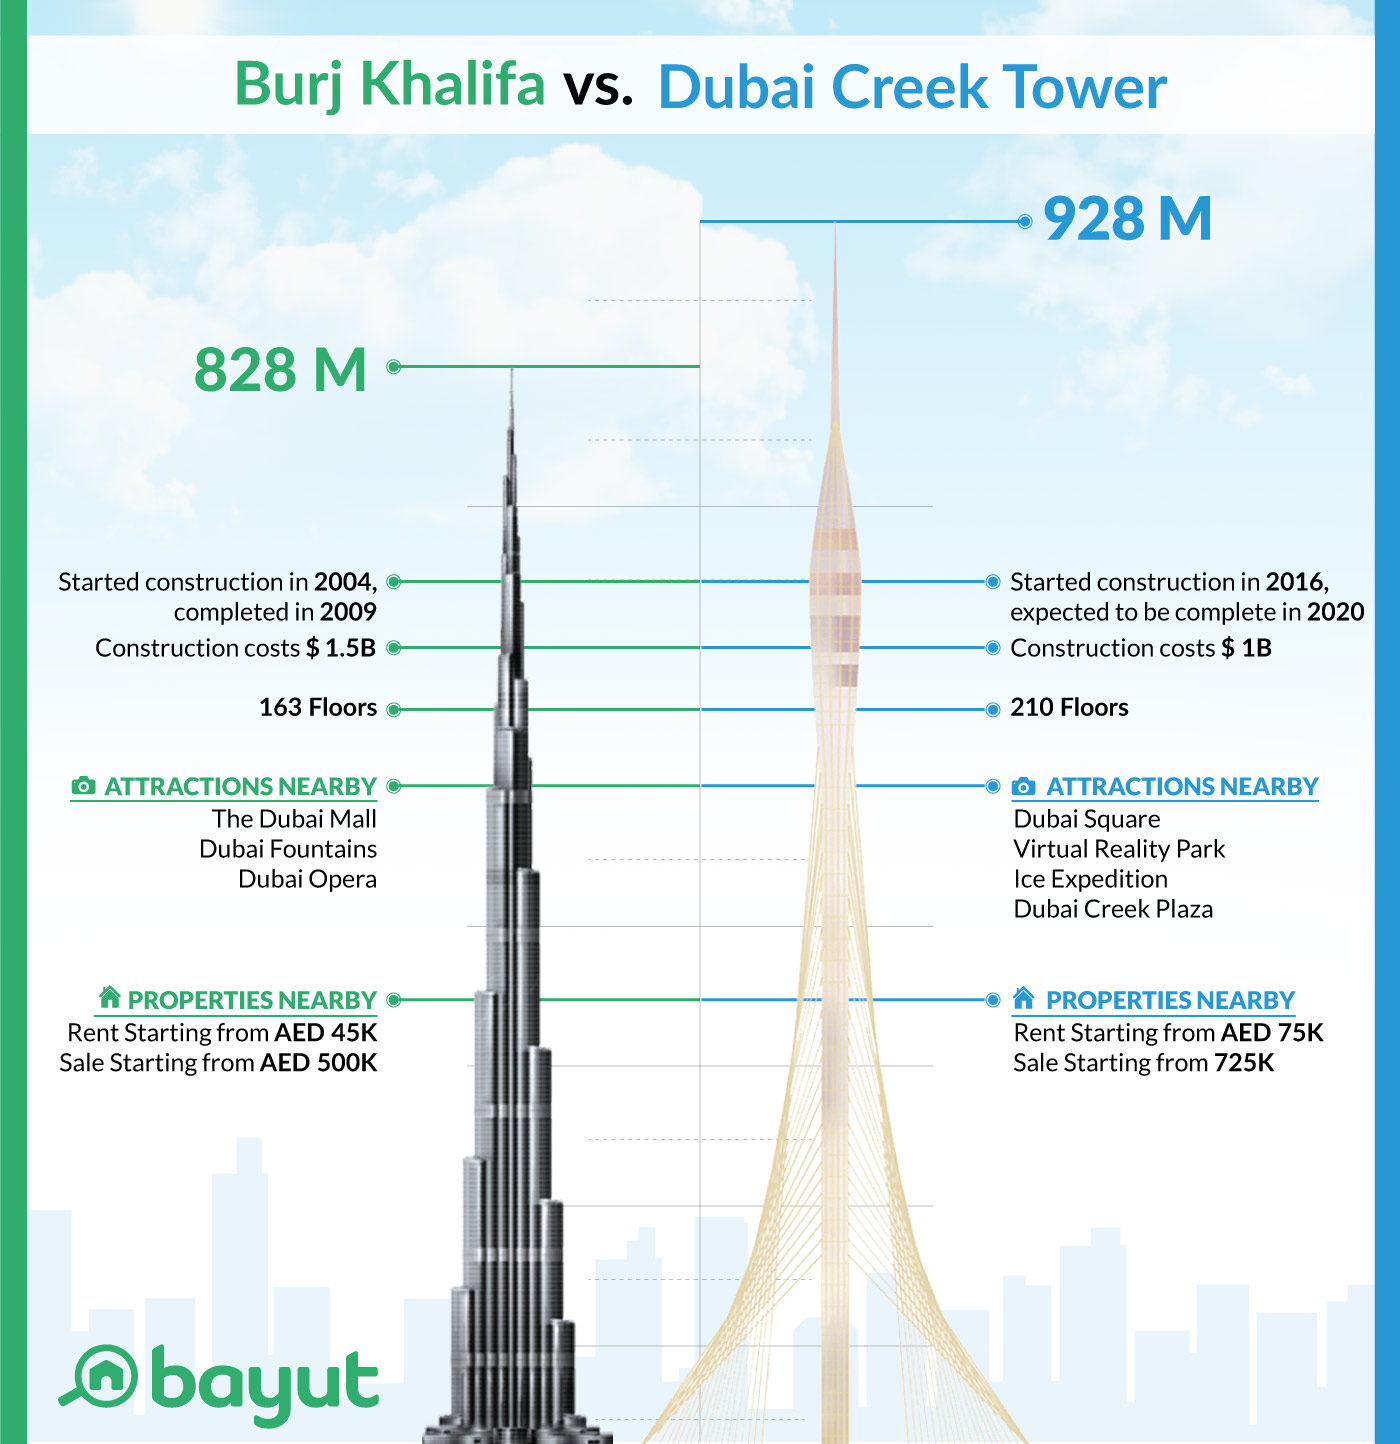 Бурдж халифа на карте. Дубай крик Тауэр. Новая башня в Дубае выше Бурдж Халифа. Dubai Creek Tower высота. Высота 125 этажа Бурдж Халифа Дубай.